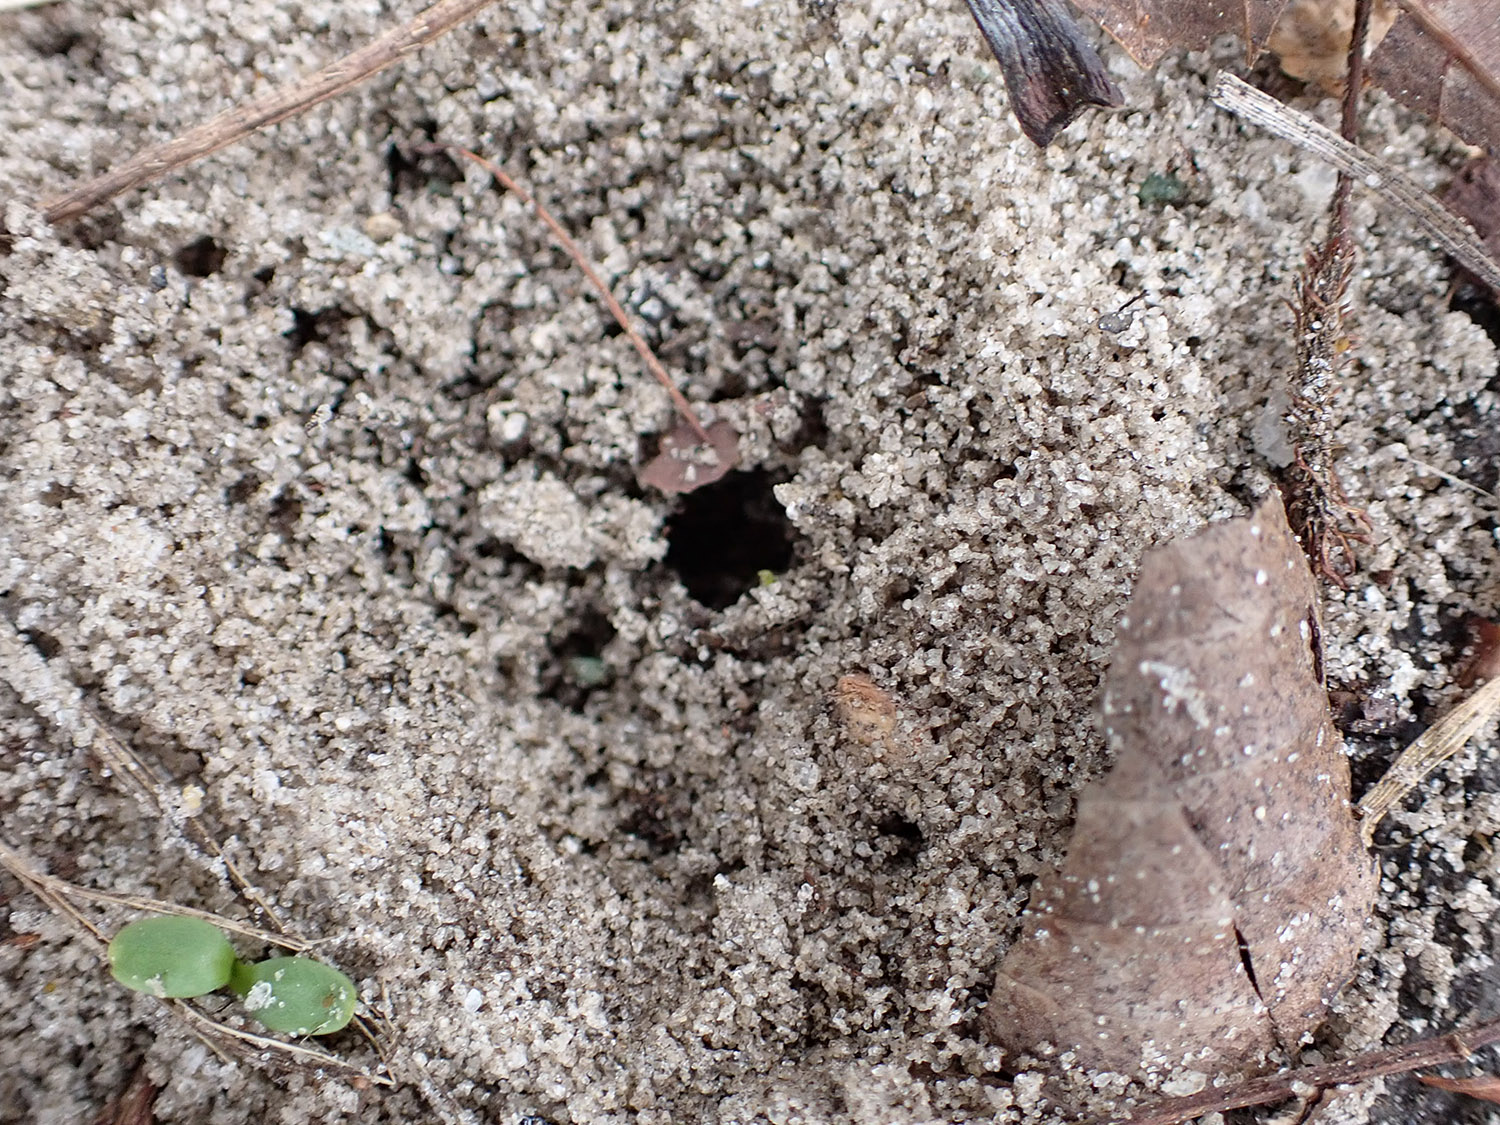 Insect nest in backyard soil.